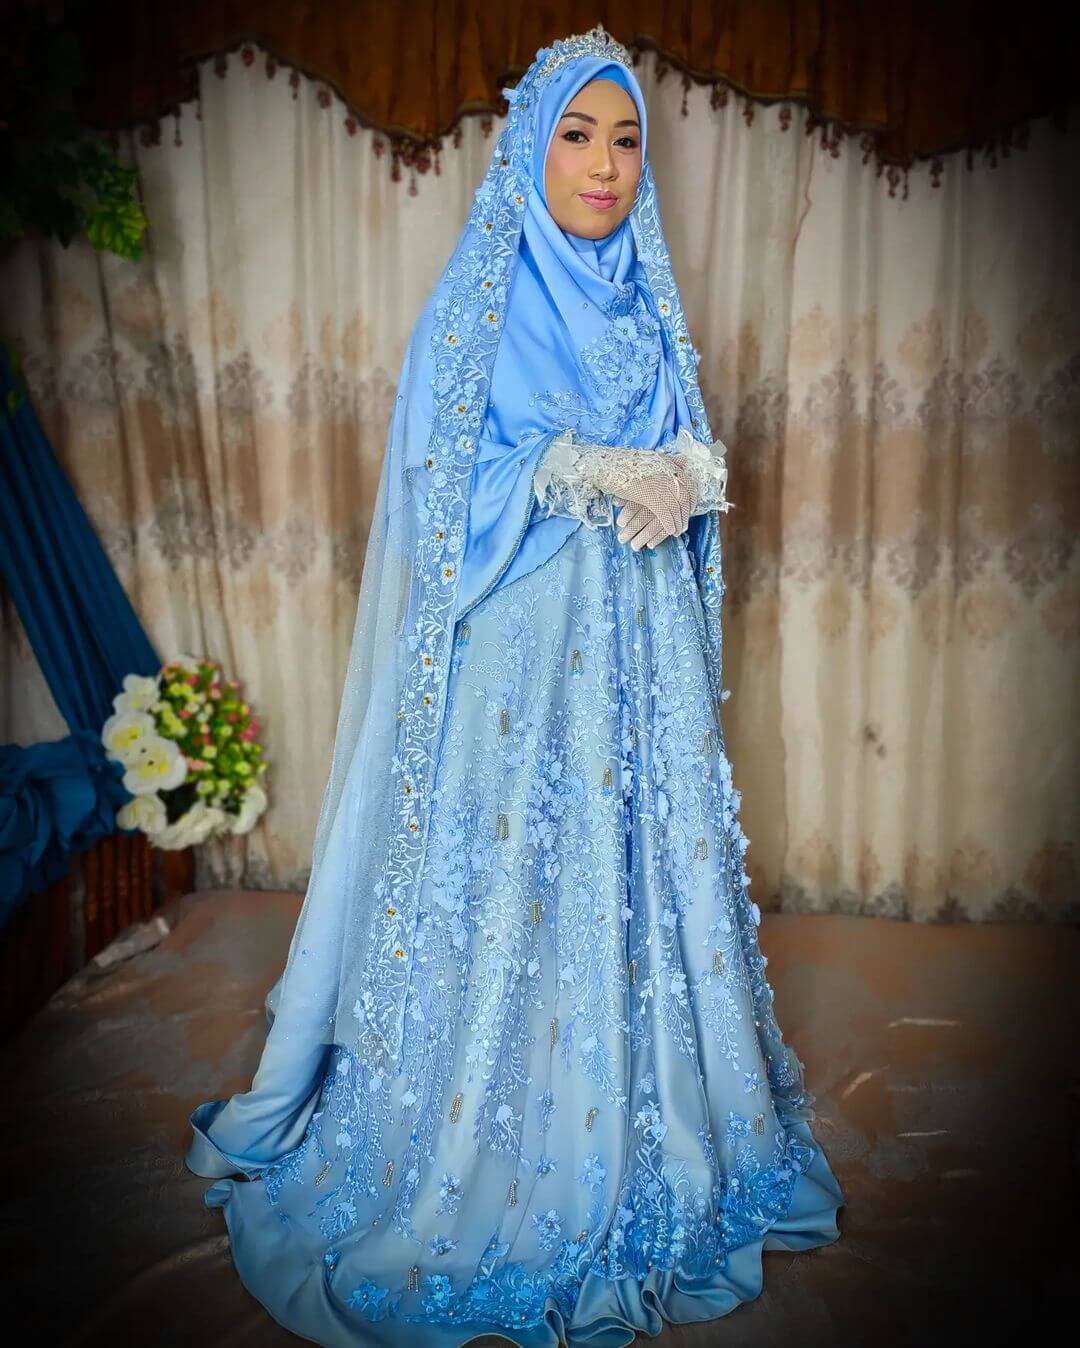 Some Modern and Fashionable Hijab Wedding Dress Ideas 2021 Blue Hijab Attire With Bridal Gloves